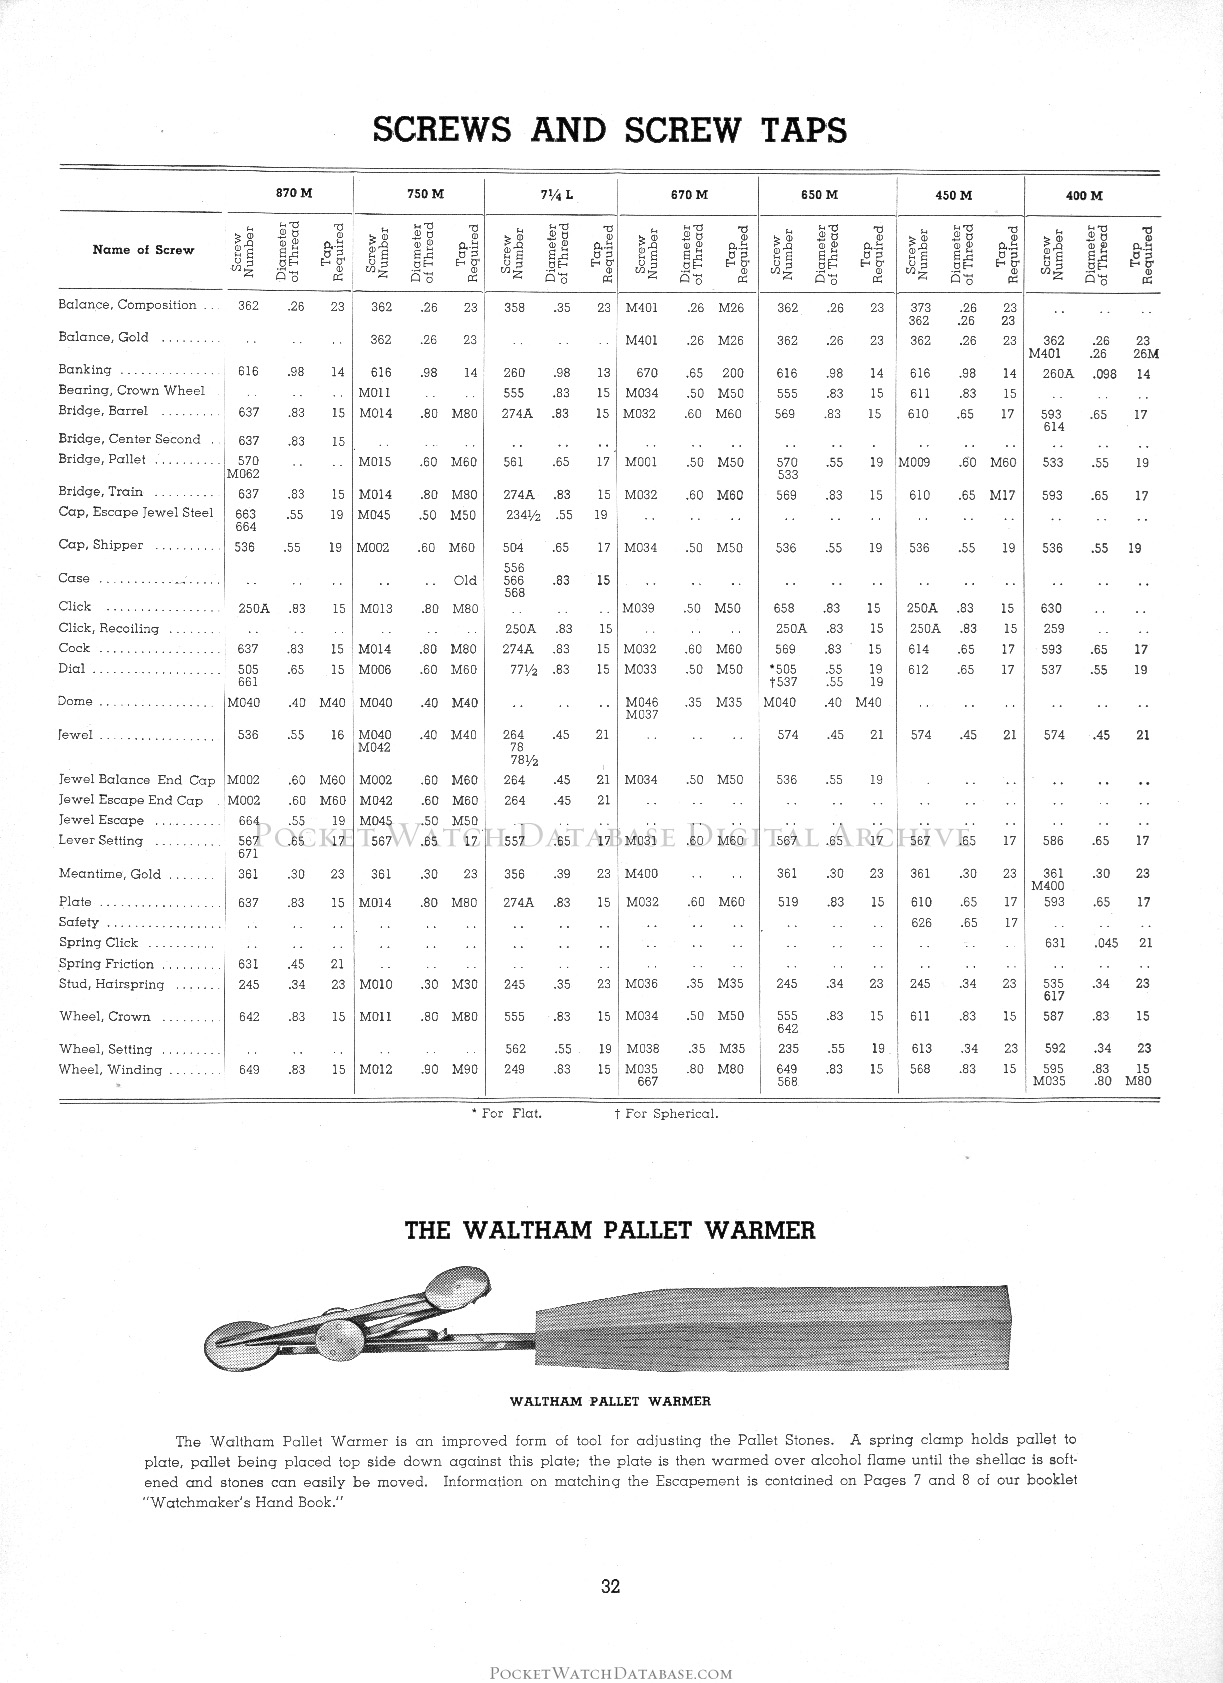 Timing Screws 1940 Waltham Watch And Clock Material Catalog Pwdb Digital Archive